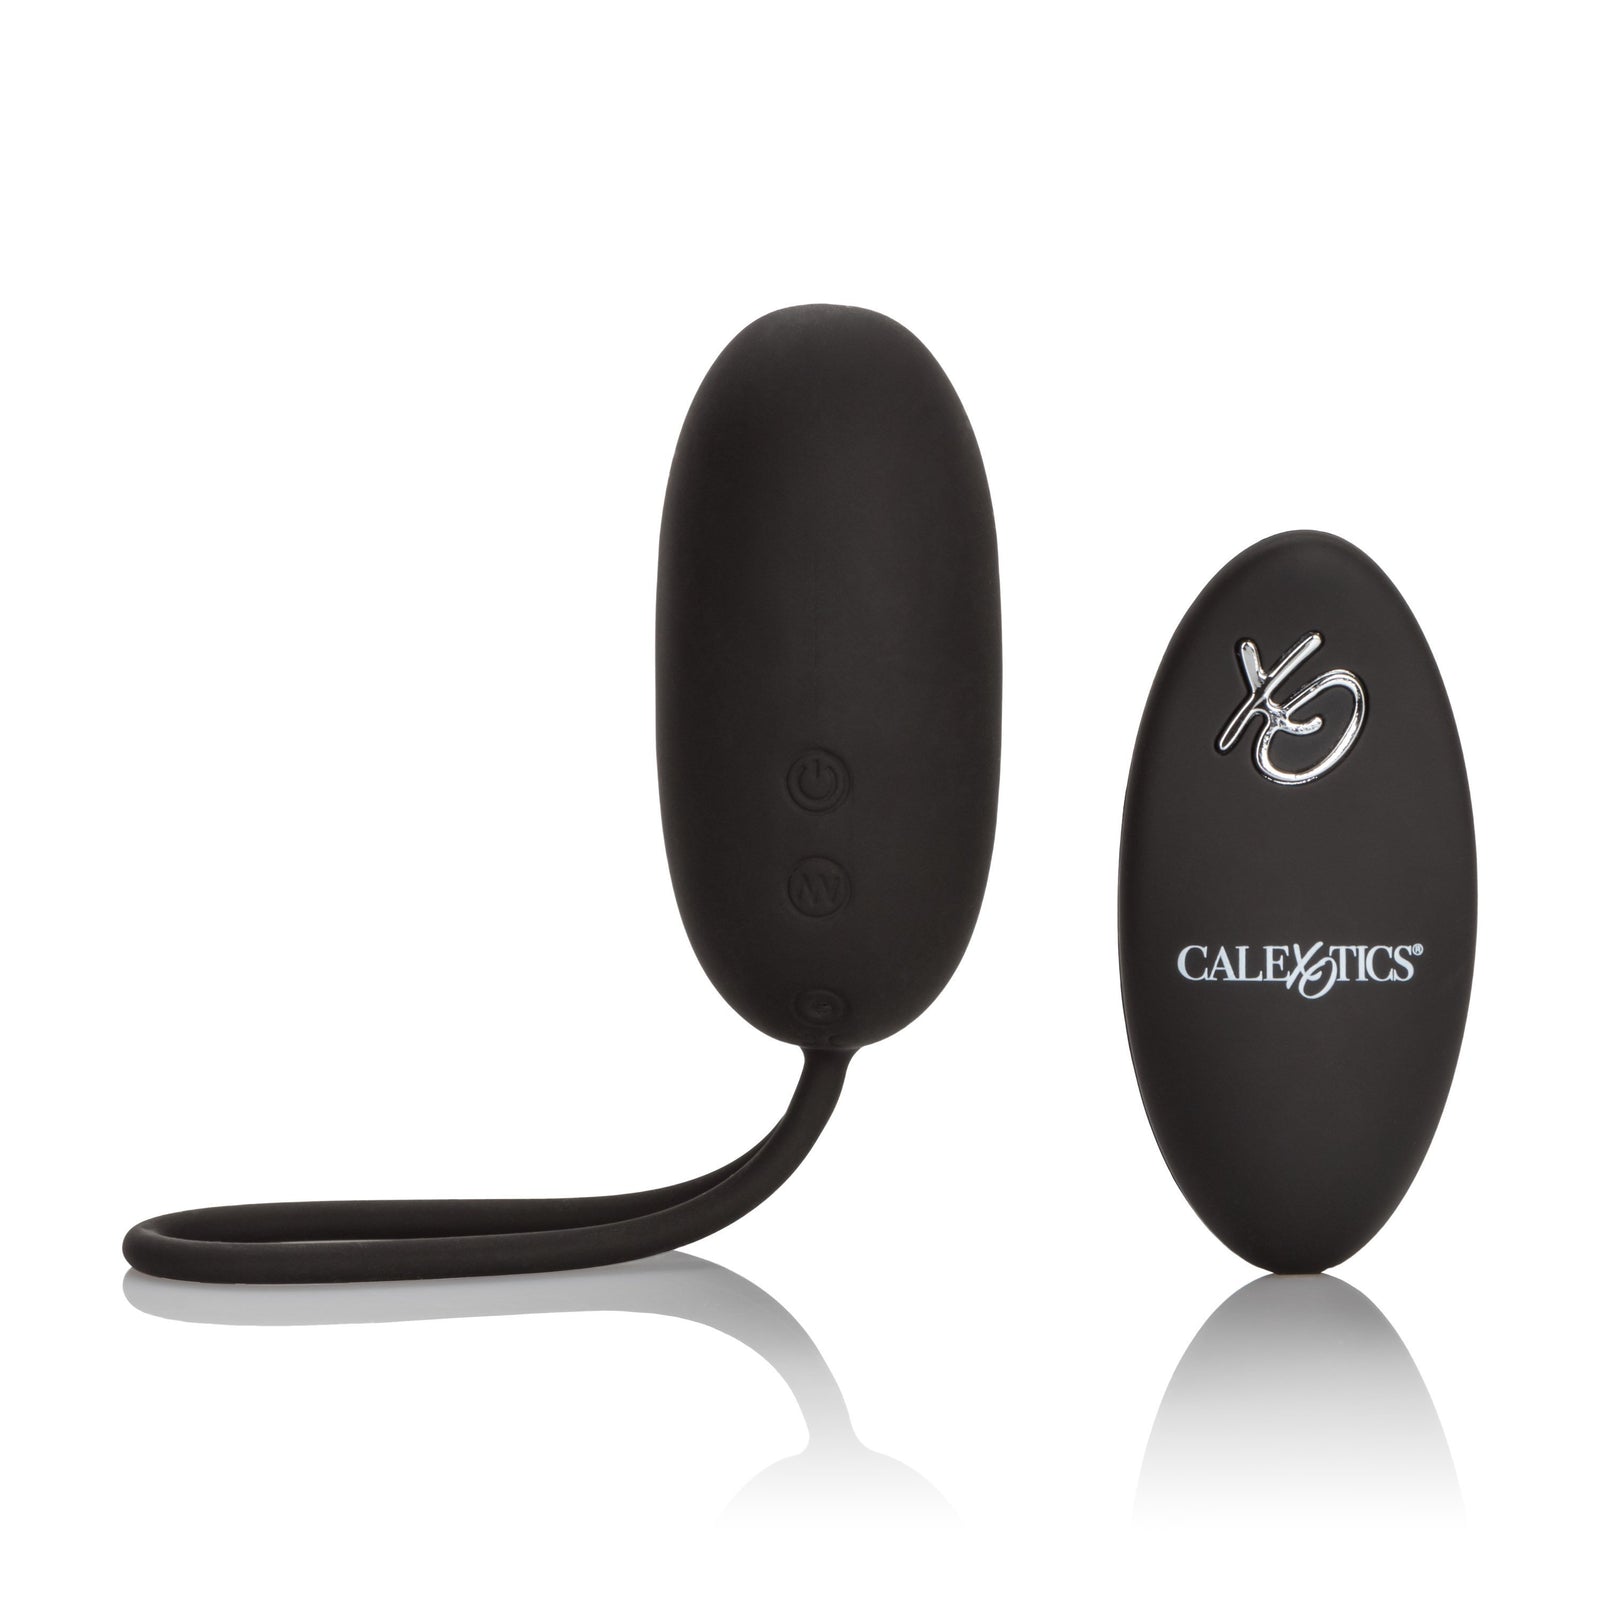 California Exotics - Silicone Remote Rechargeable Egg Vibrator (Black) Wireless Remote Control Egg (Vibration) Rechargeable Durio Asia